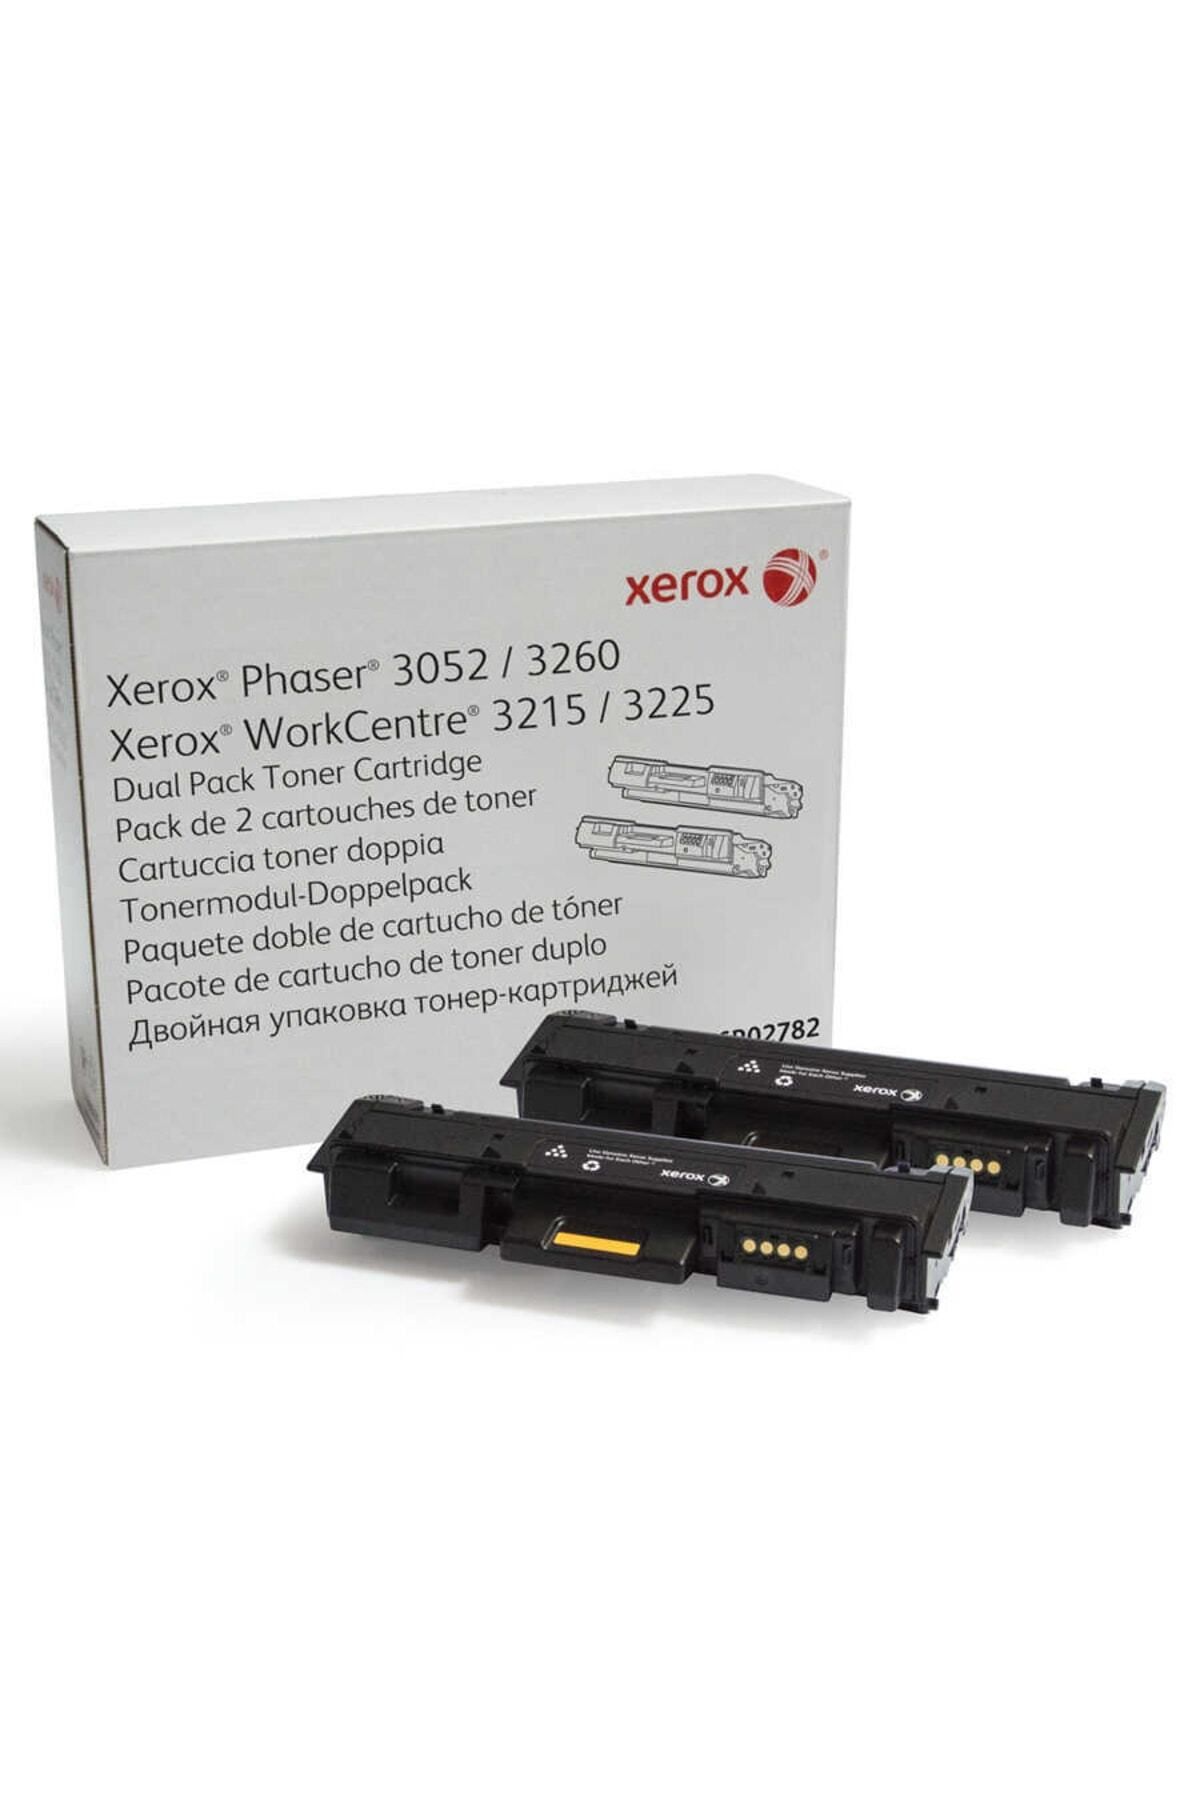 Xerox 3052 Phaser 3052 Dual Kapasite 106r02782 Siyah Toner